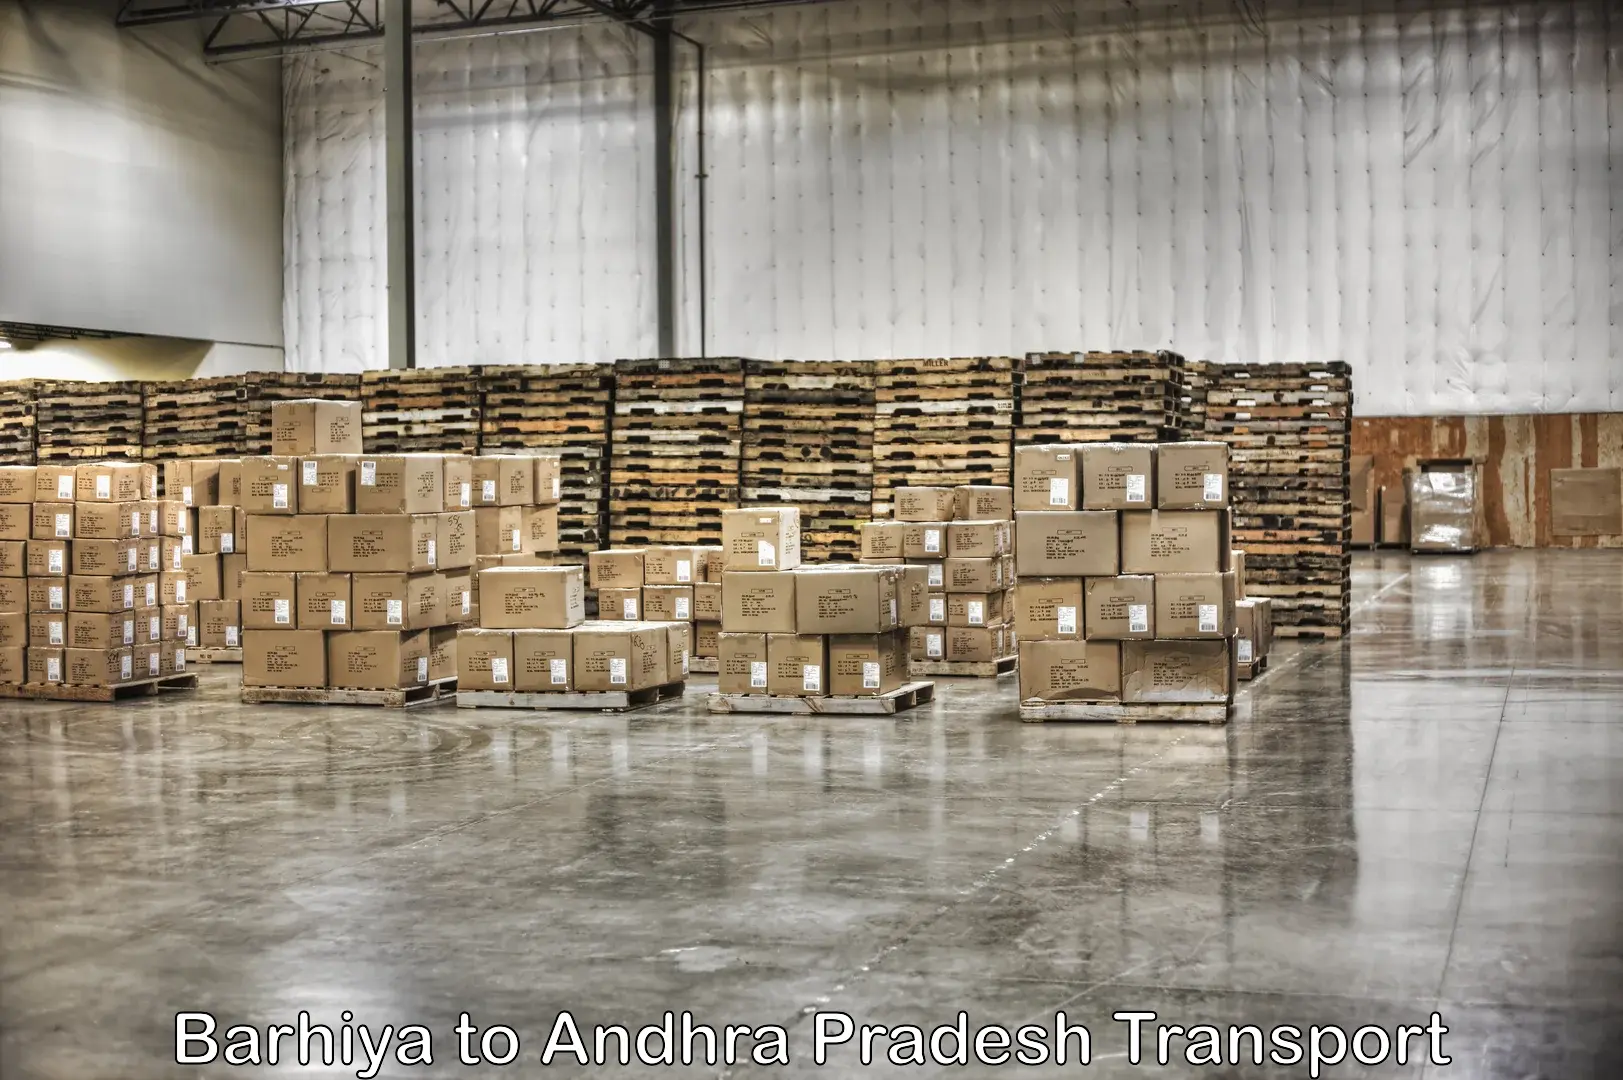 Truck transport companies in India Barhiya to Visakhapatnam Port